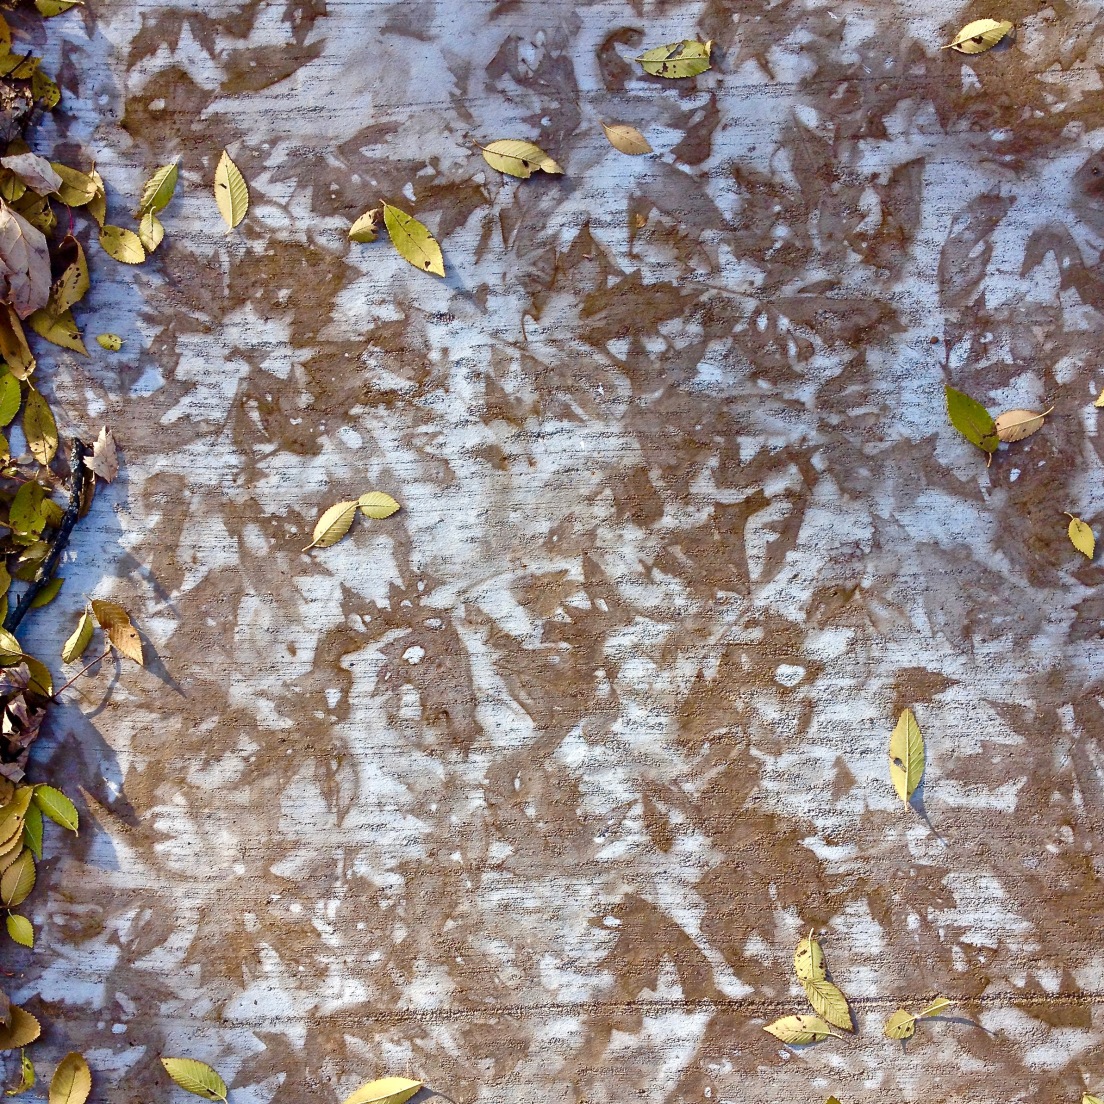 Almost tesselation of leaf prints